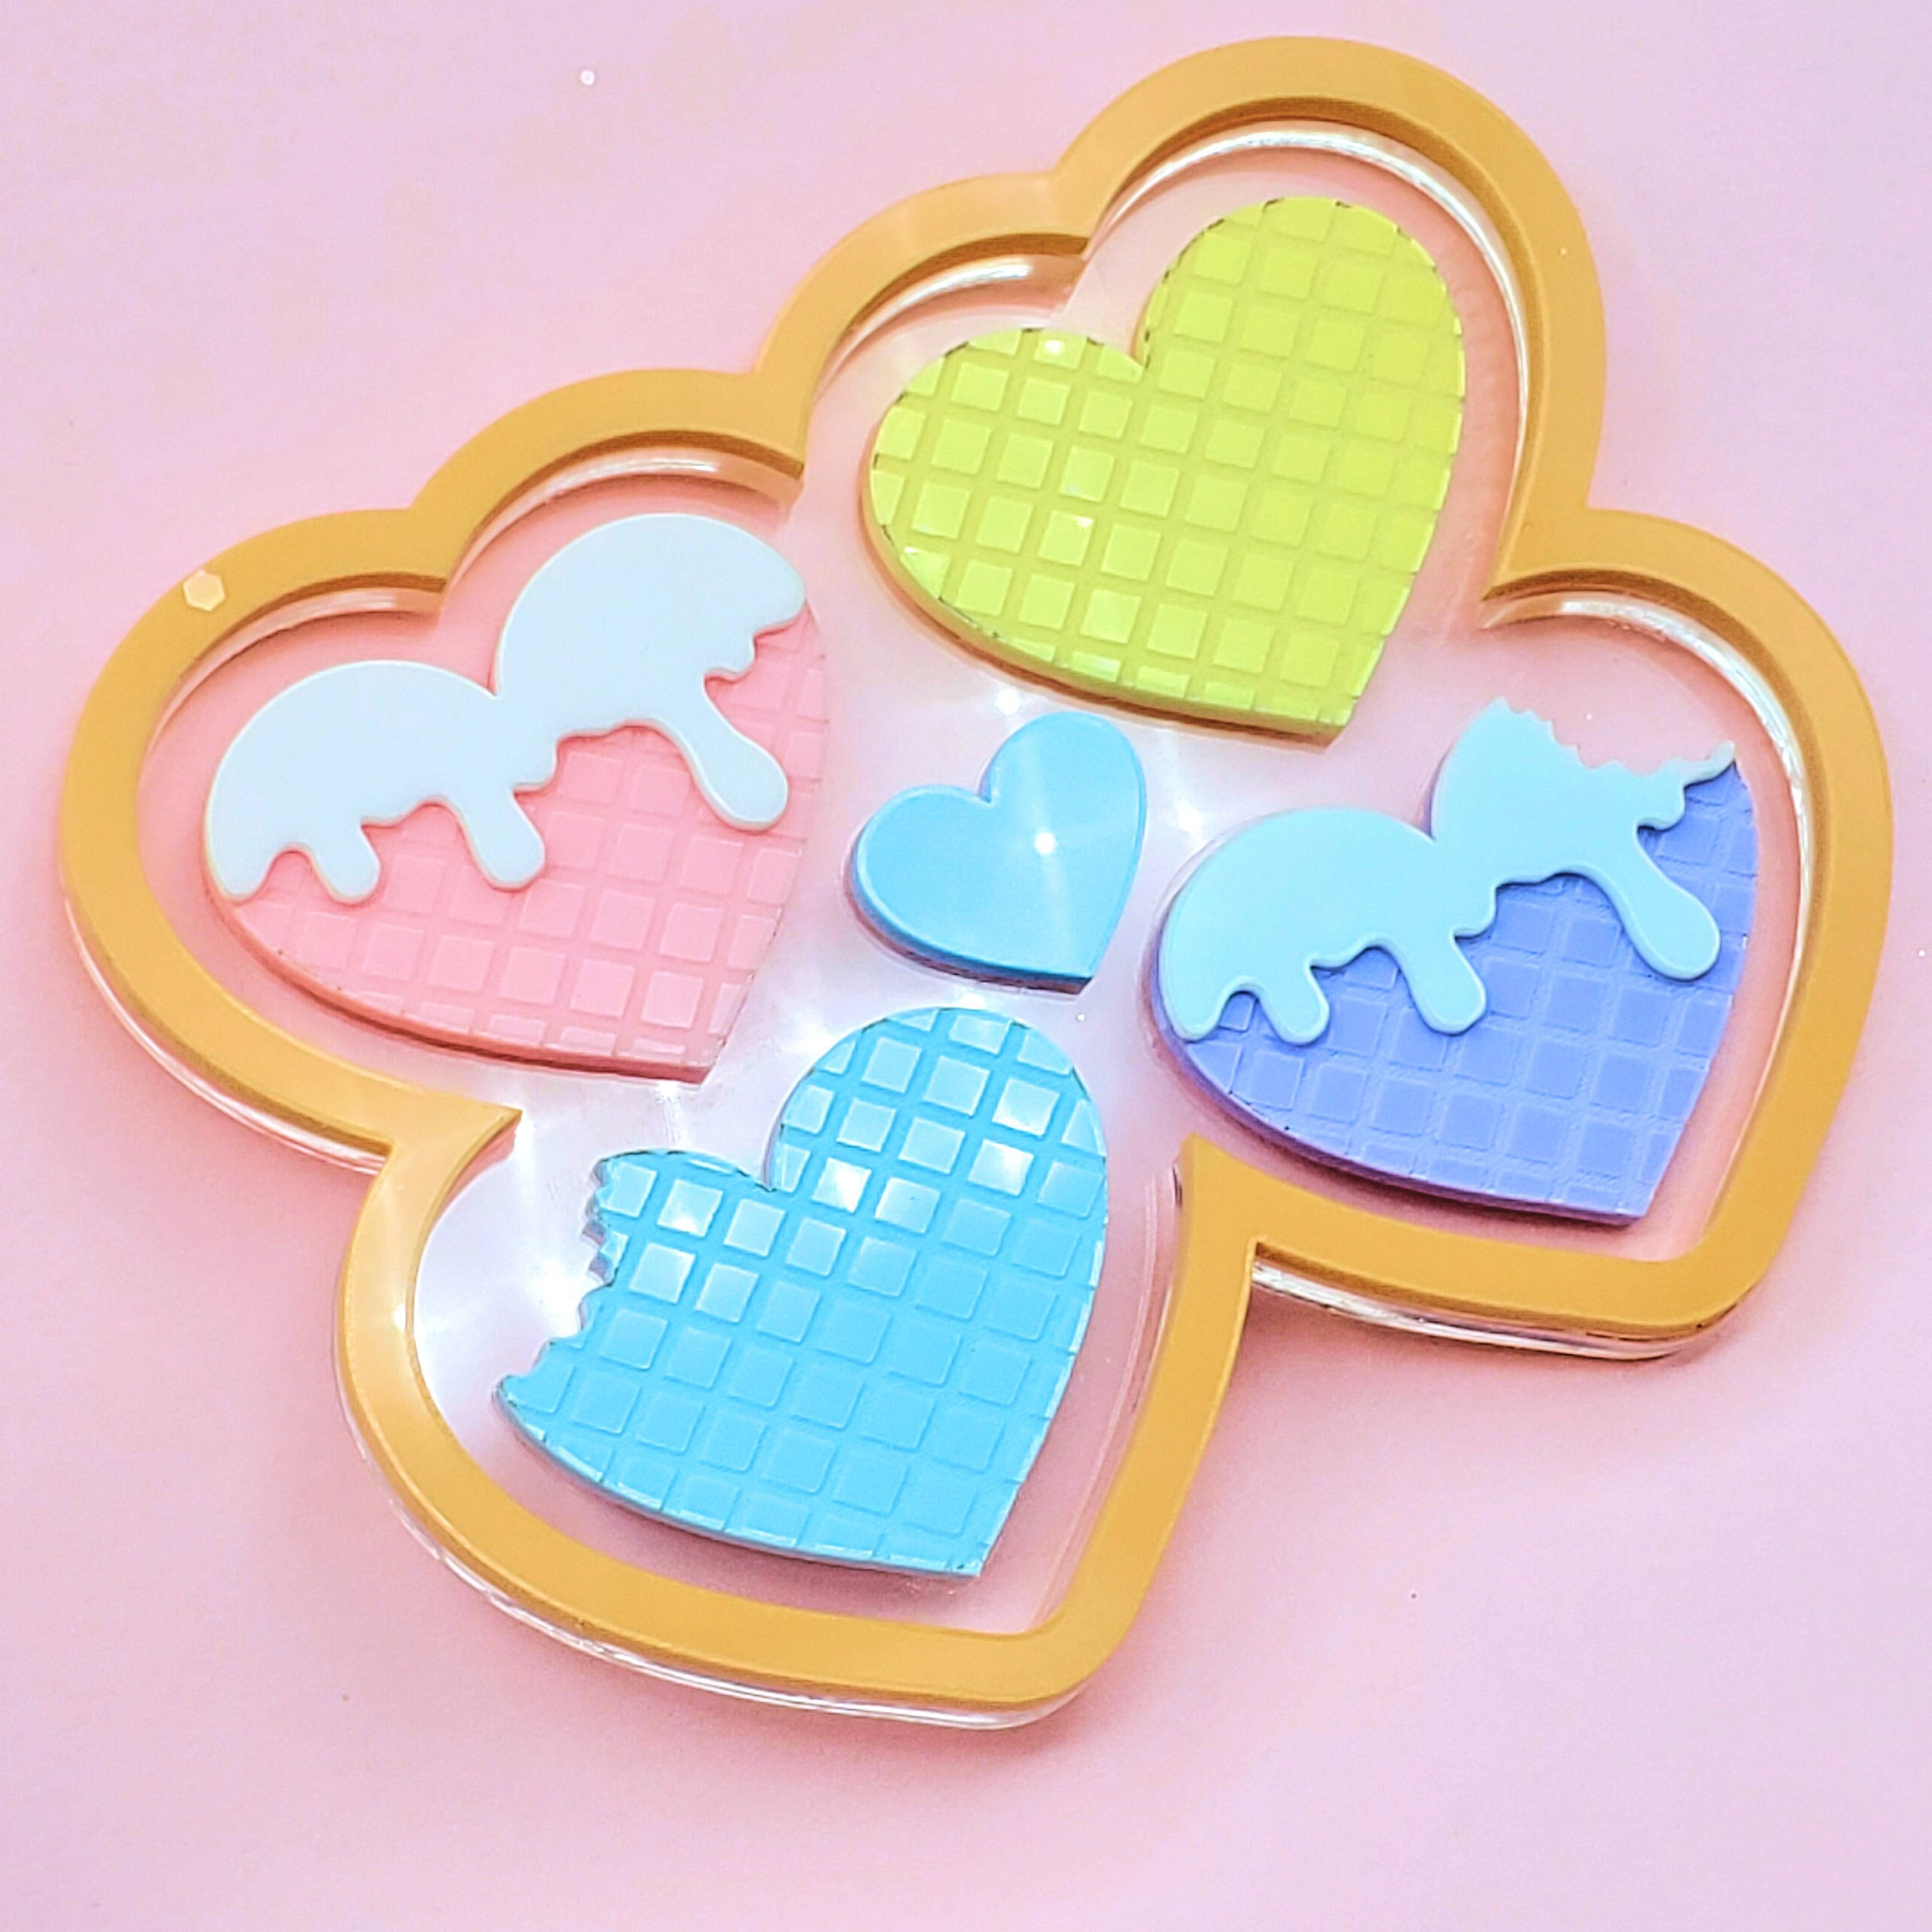 12 Cavity Victorian Heart Candy Mold-mini Hearts Silicone Mold